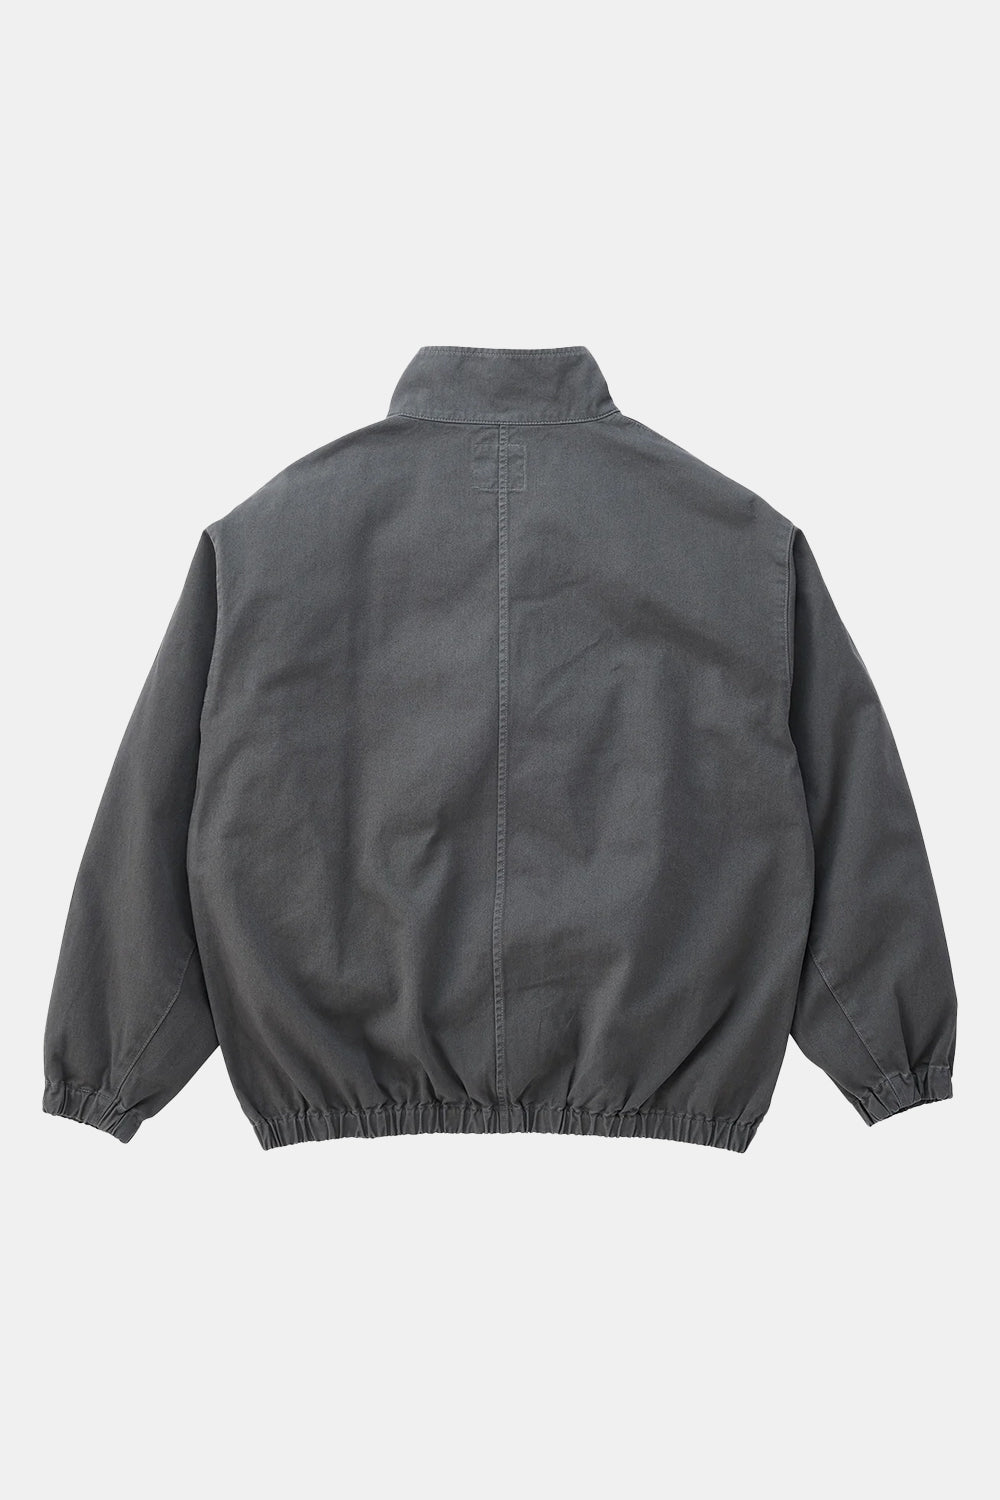 Gramicci Twill-Around Jacket (Charcoal)